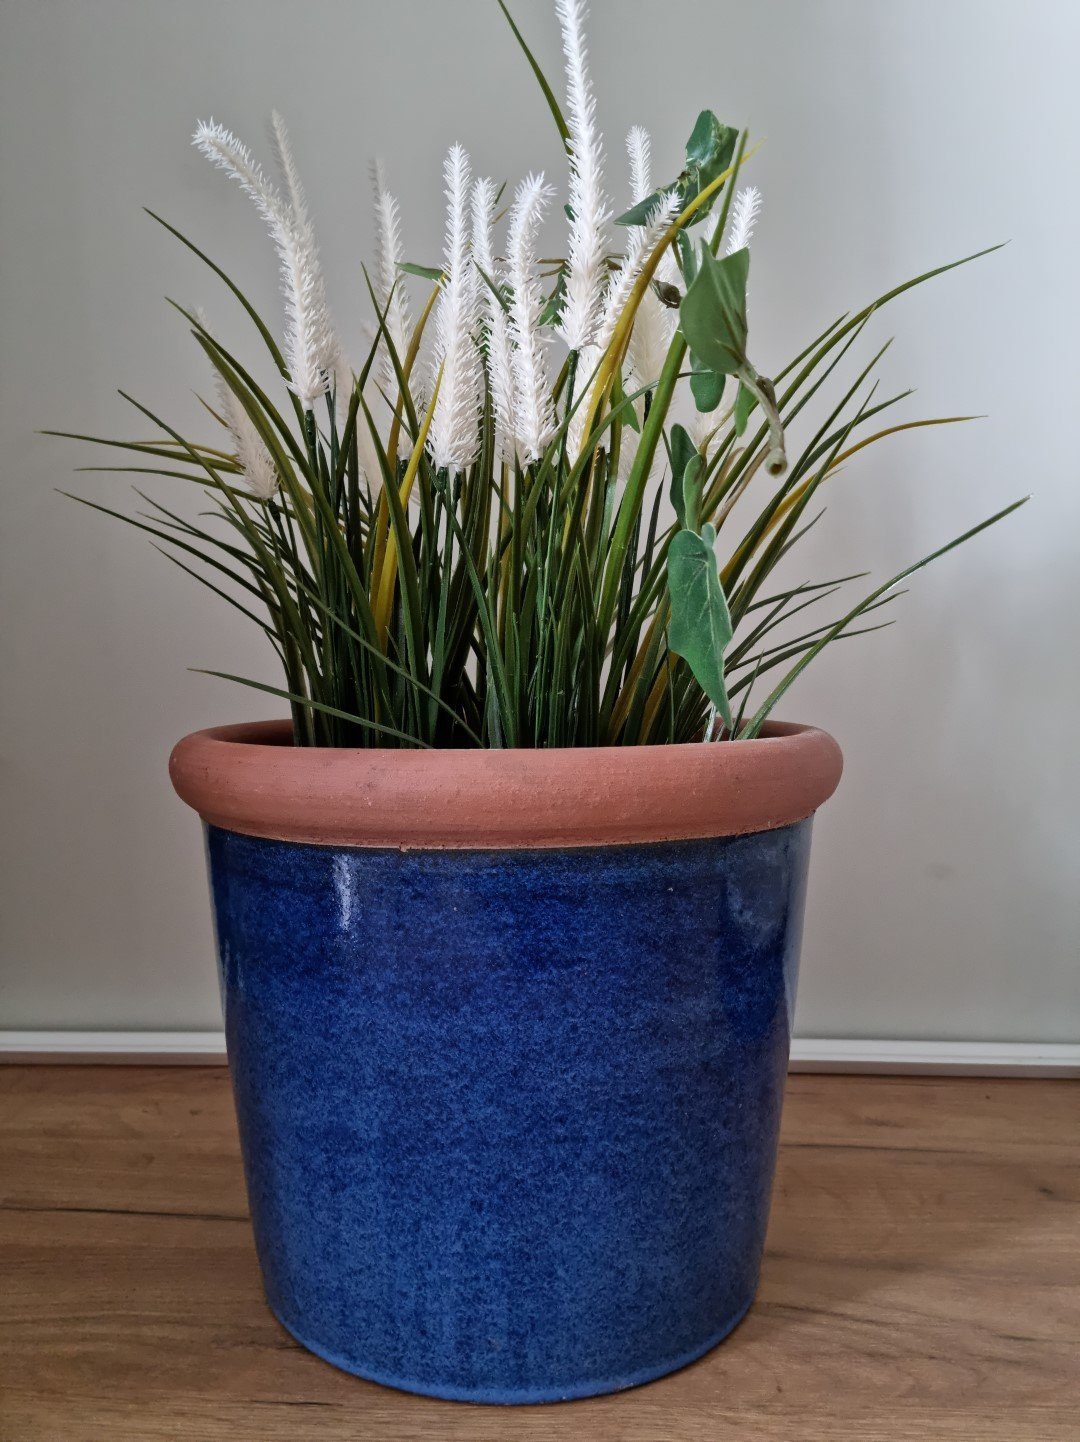 Teramico Pflanzkübel Blumentopf Keramik "Southfork" 33x26cm Blau Royal,  100% Frostfest